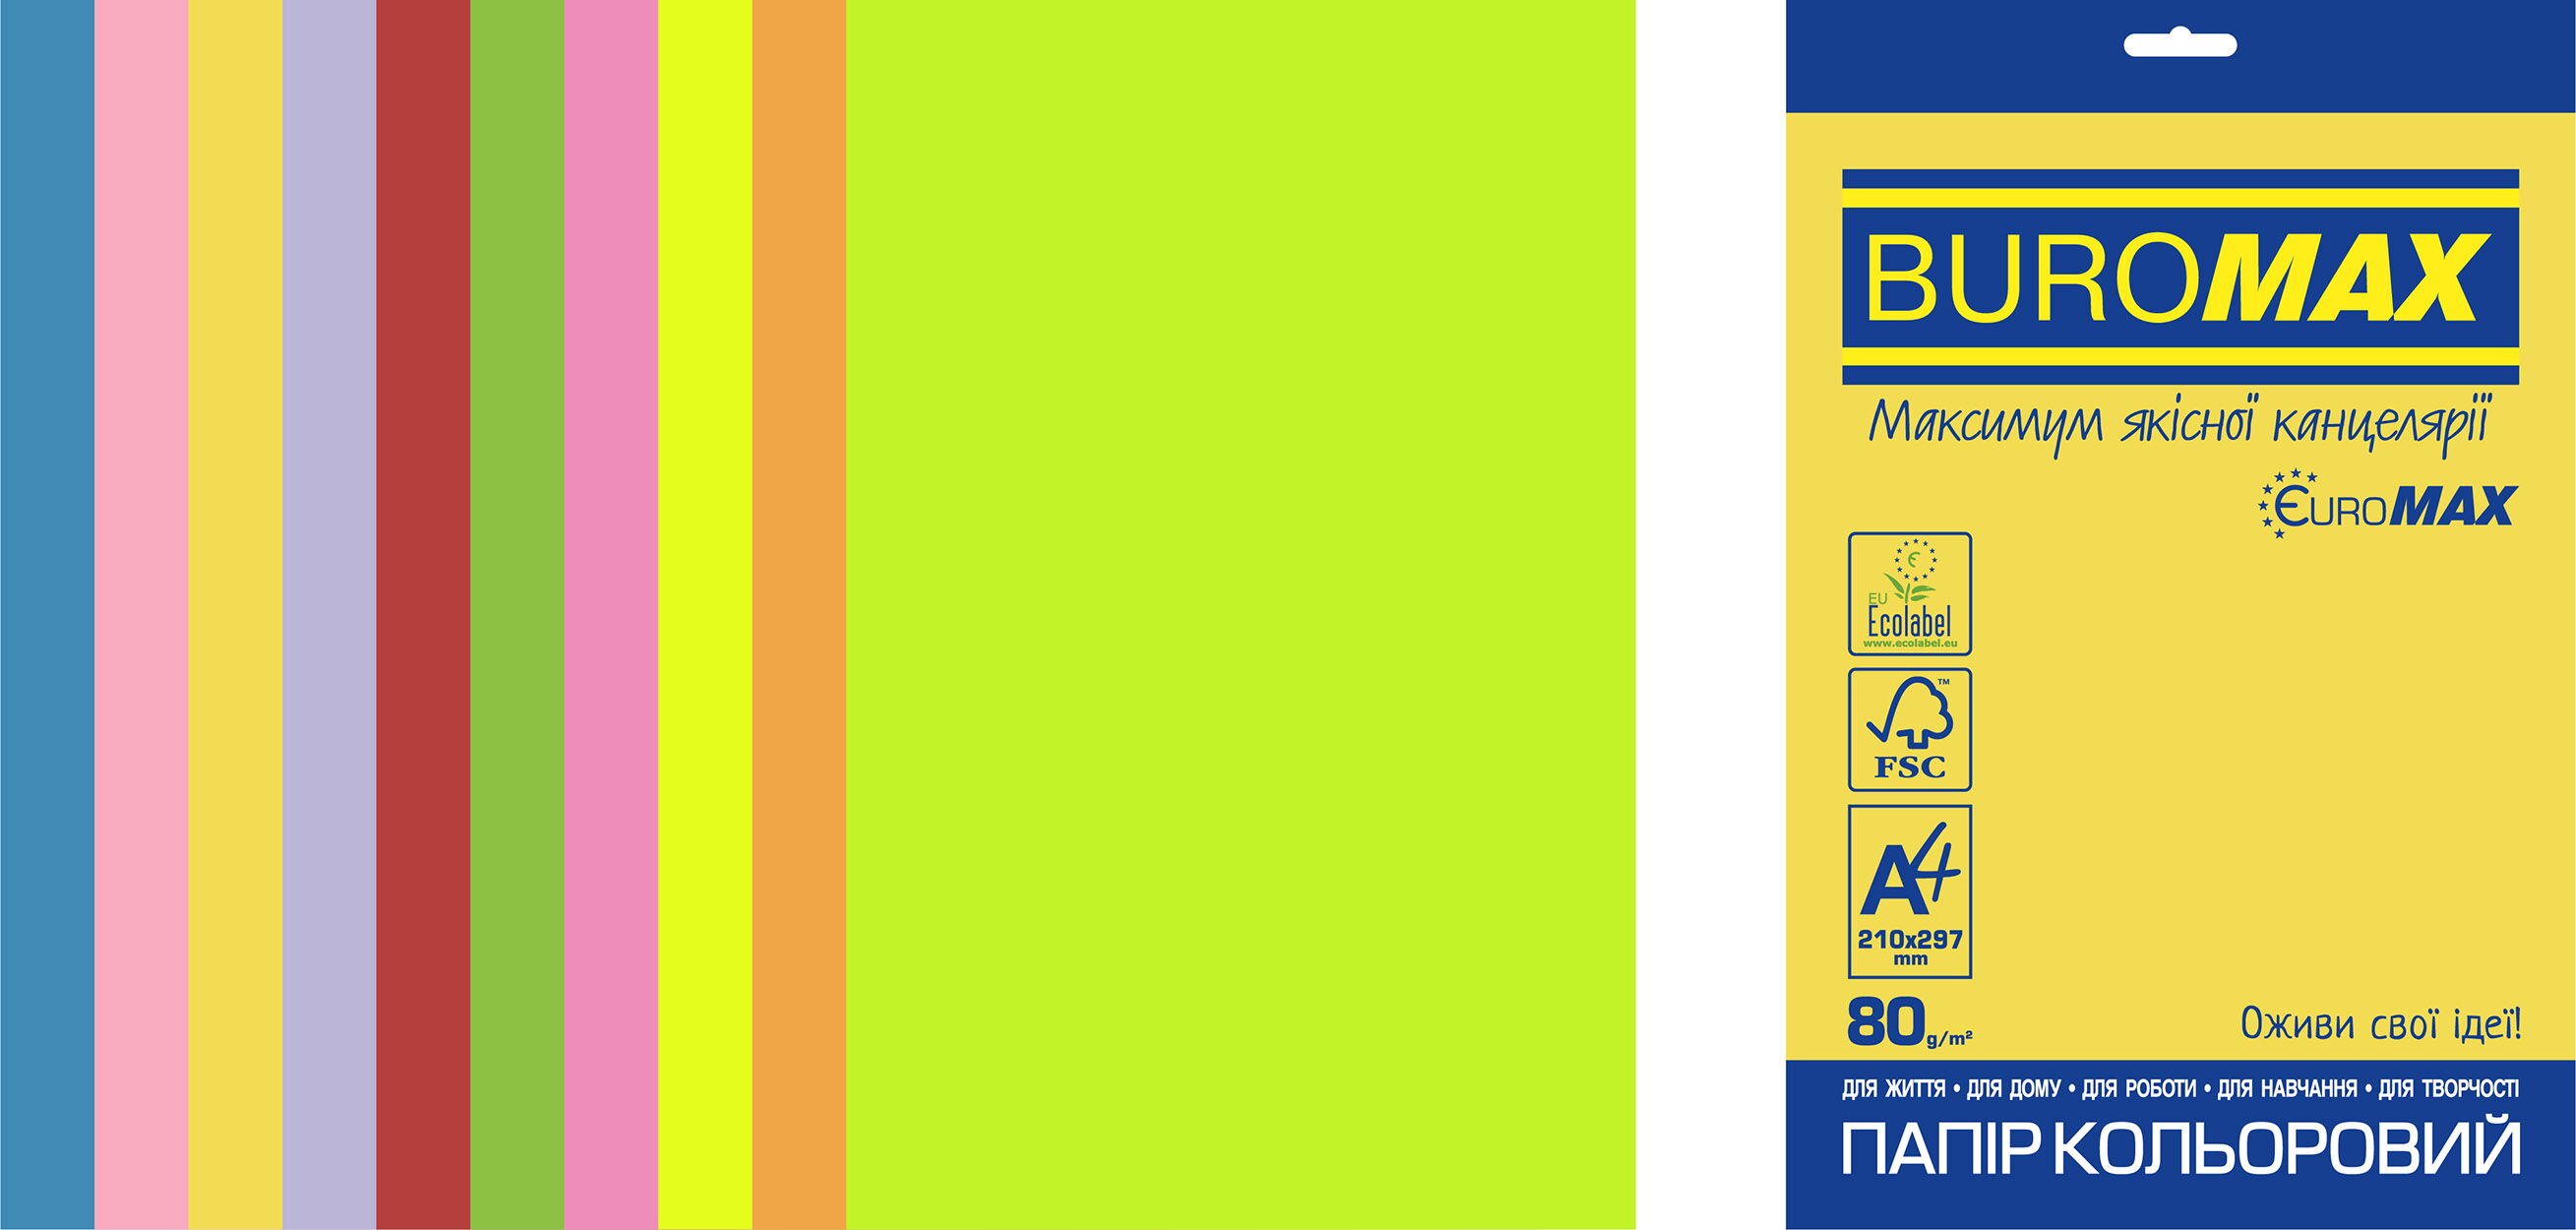 Набор цветной бумаги Buromax NEON+INTENSIVE EUROMAX, 80 г/м2, 20 листов, ассорти